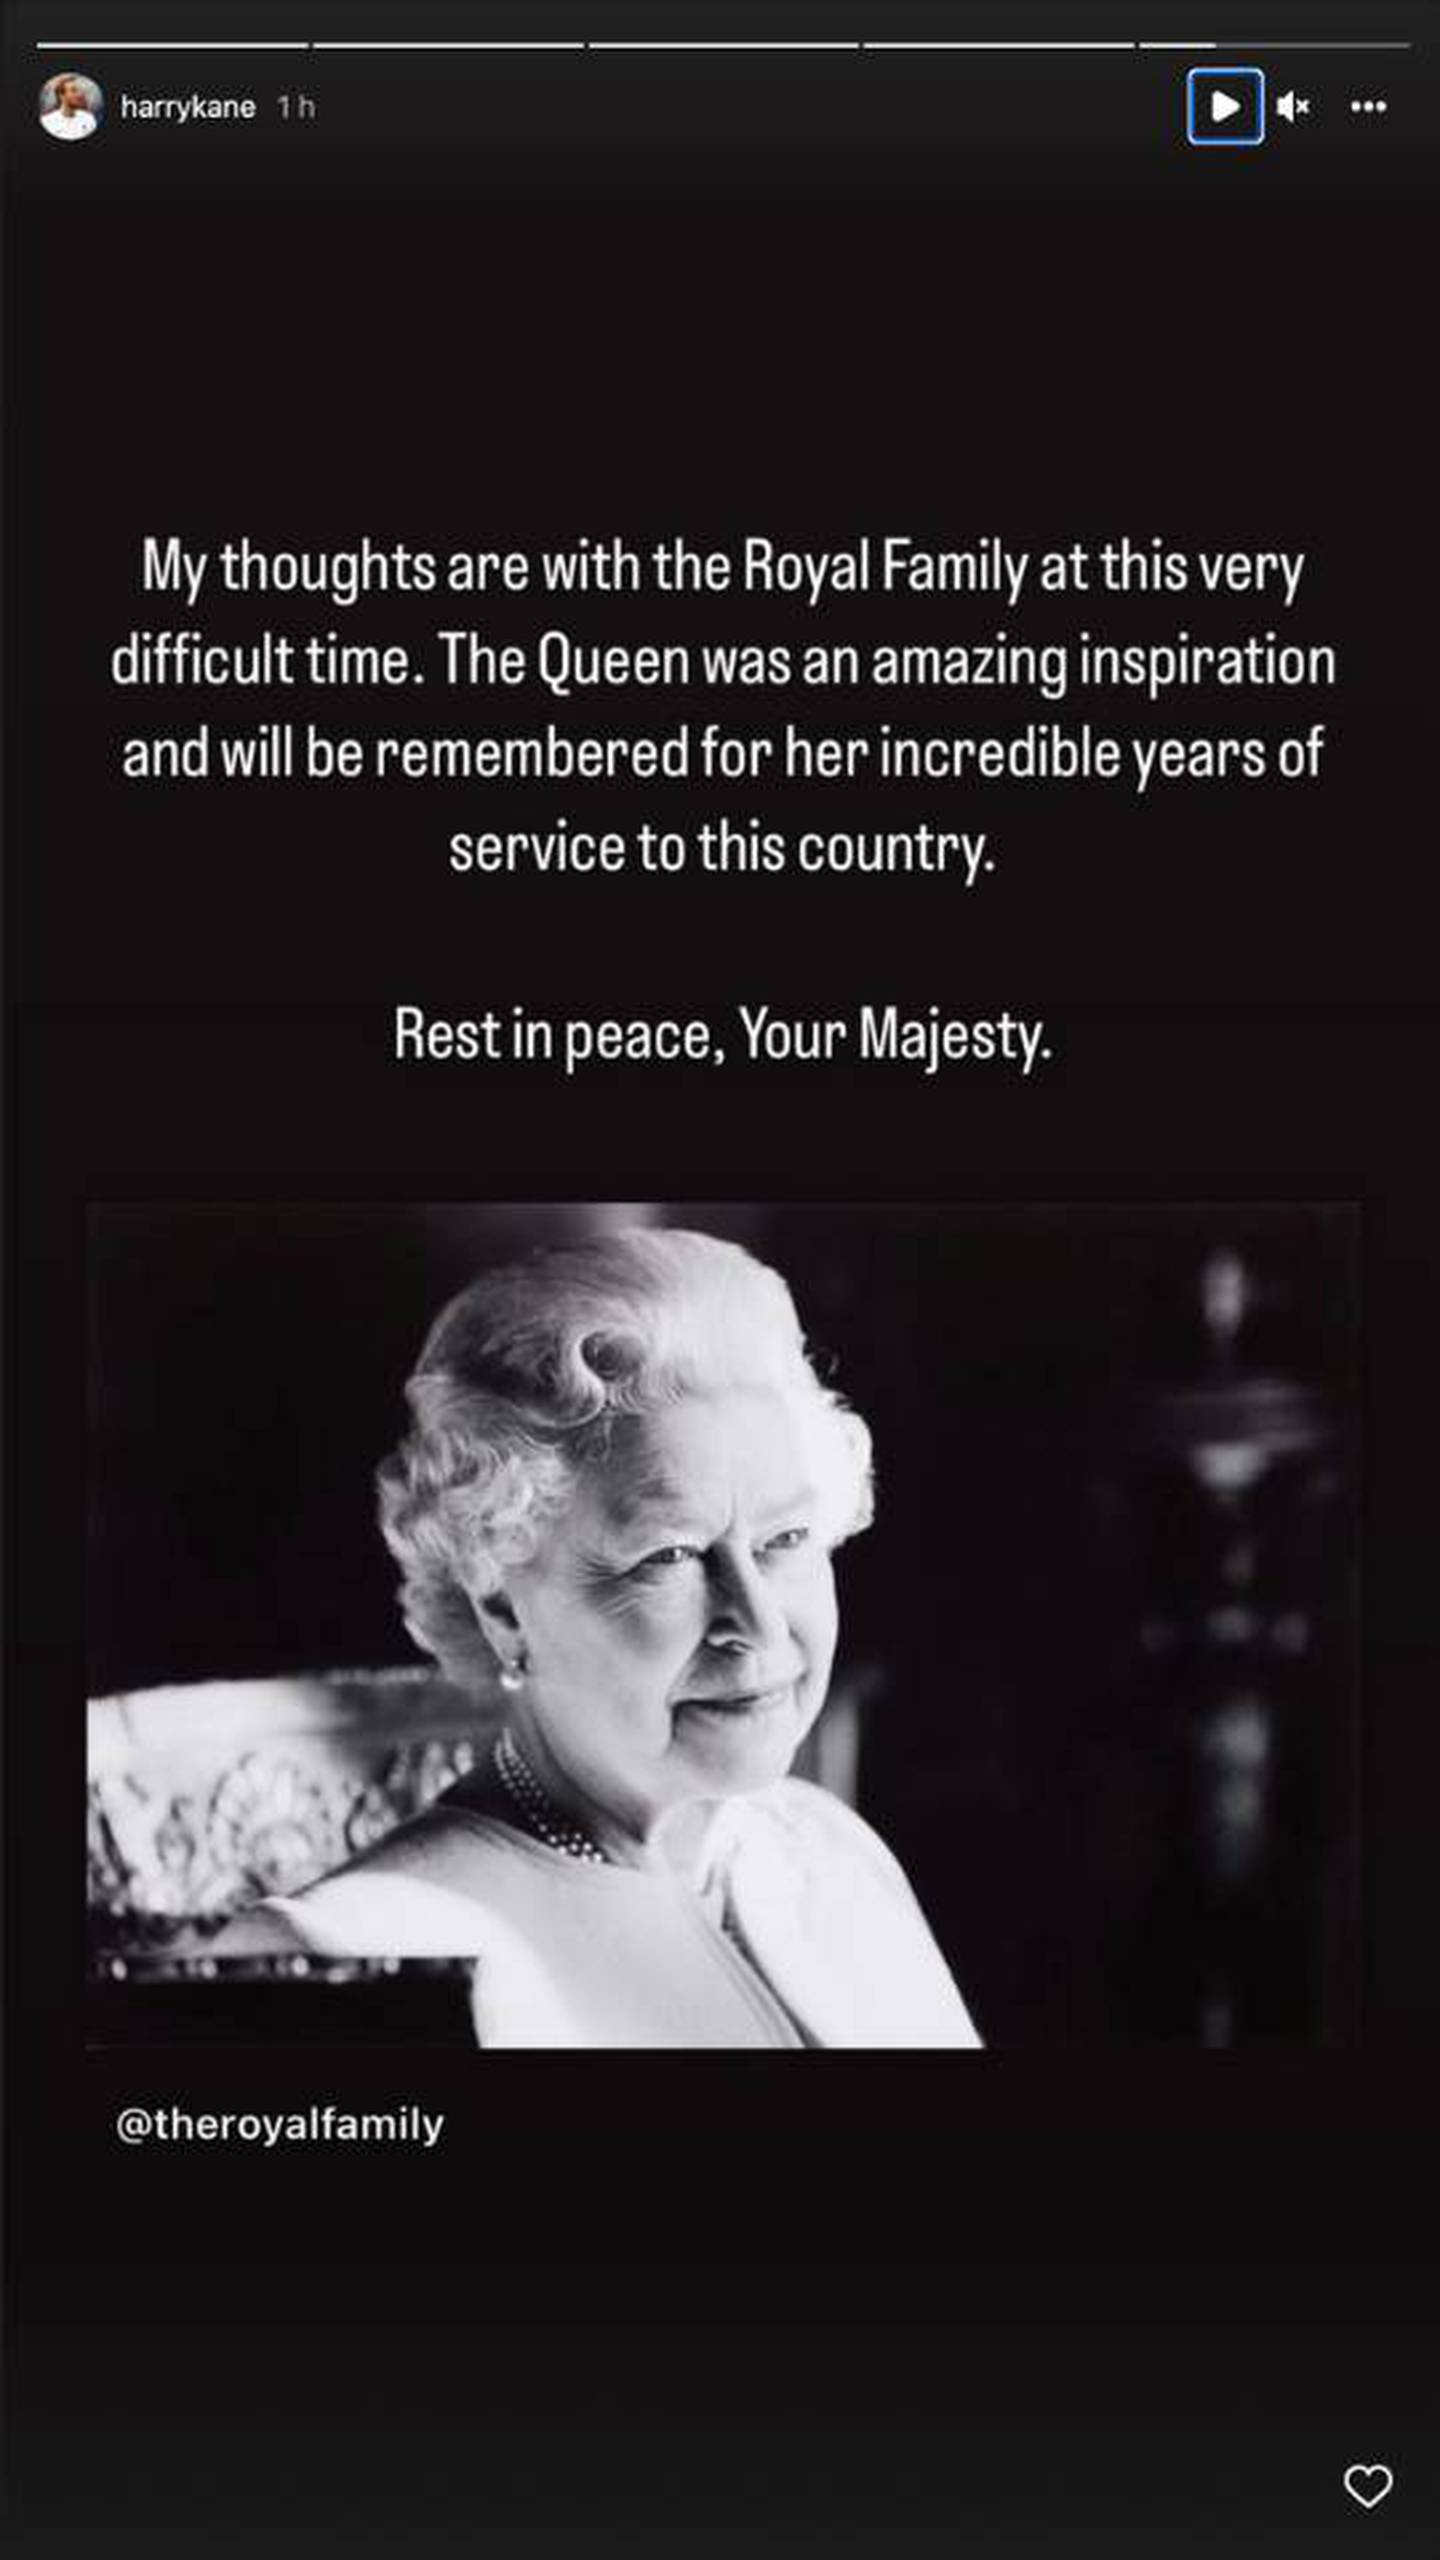 Mensaje de Harry Kane sobre la muerte de la Reina Isabel II